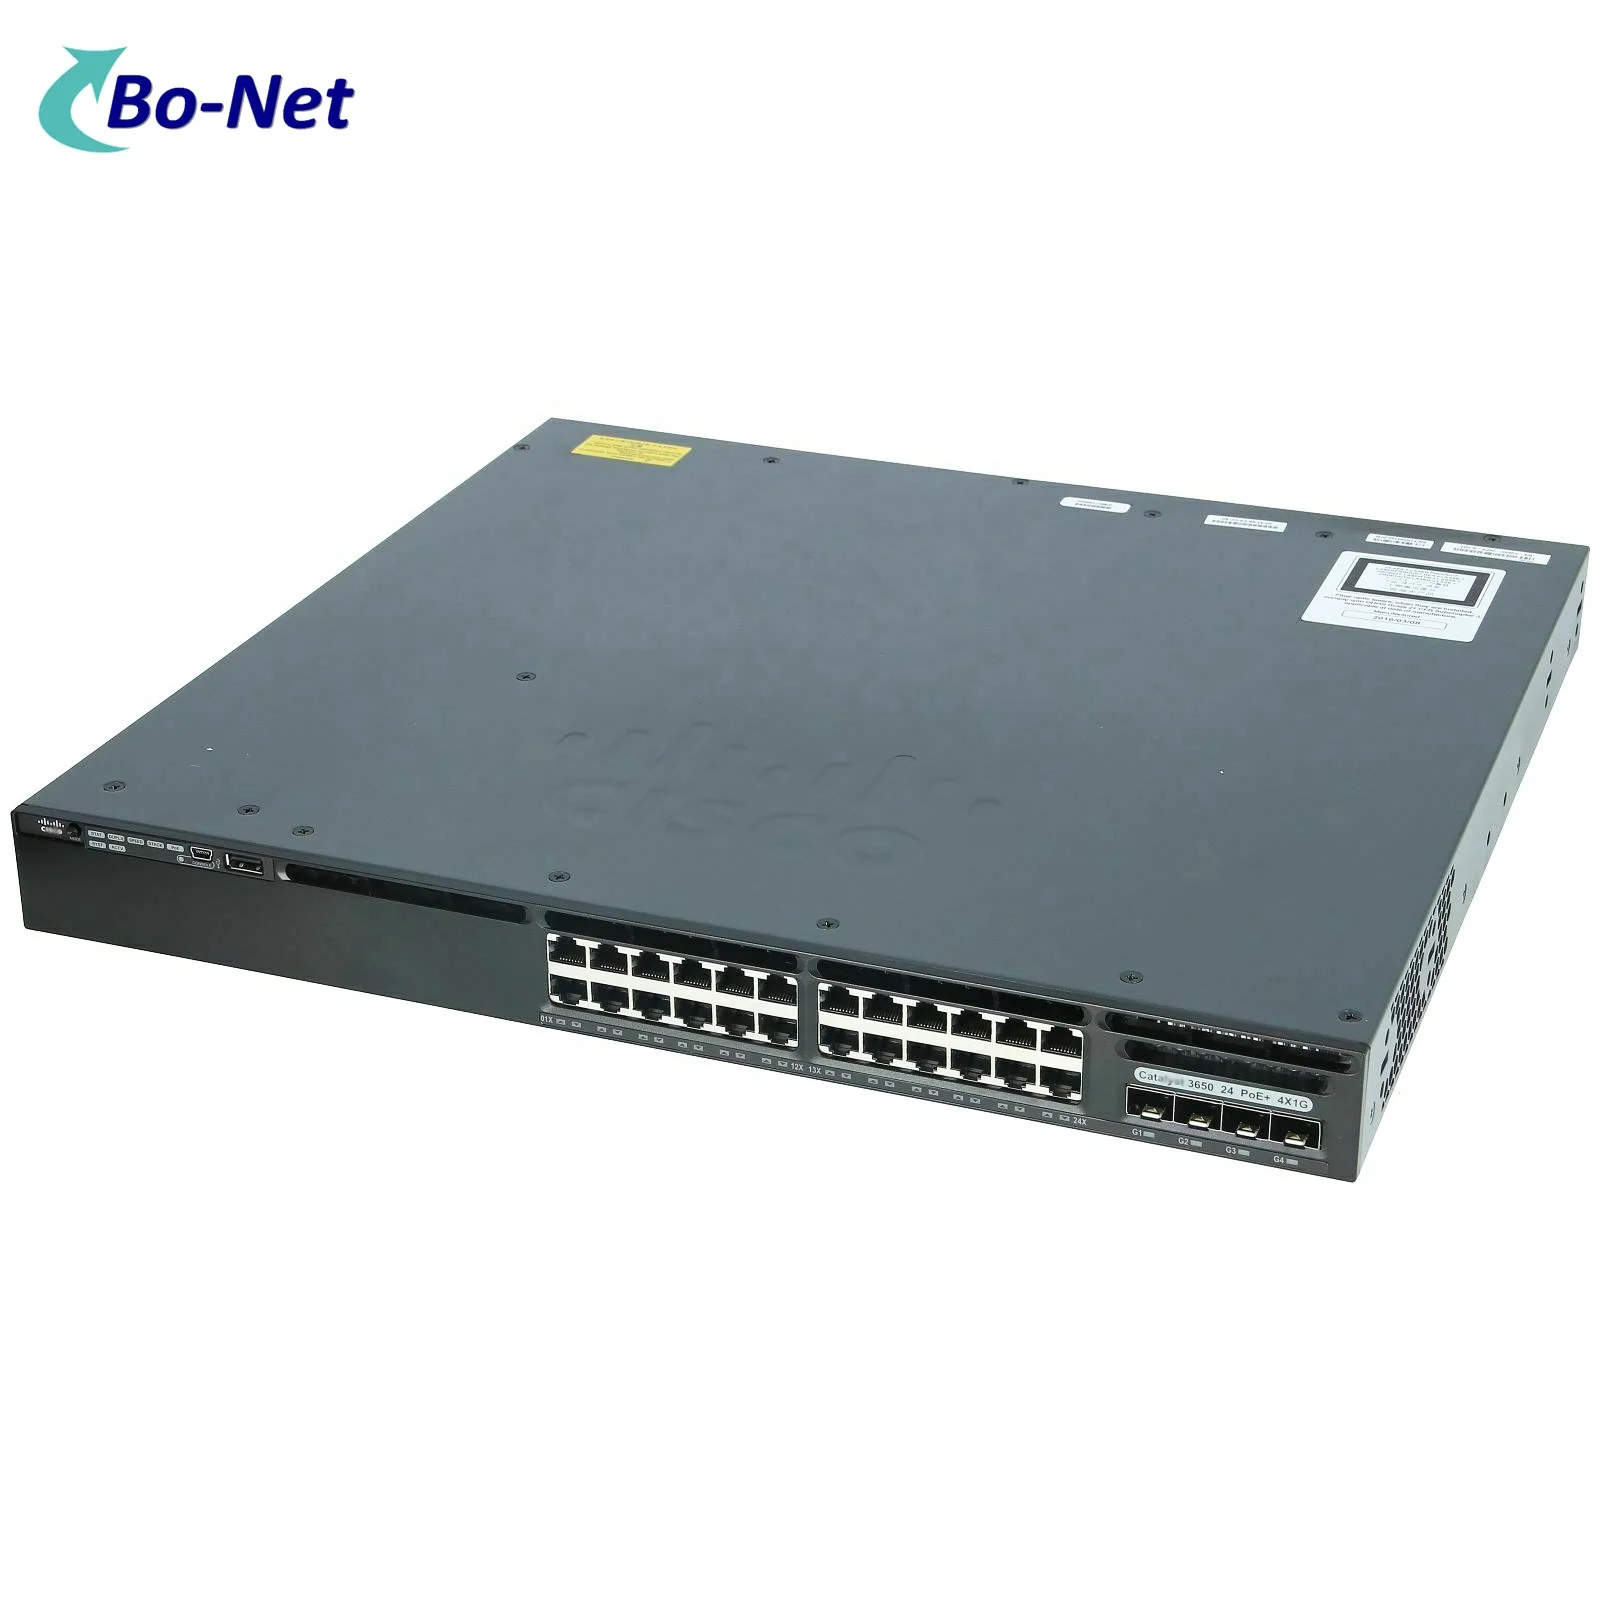 CISCO 3650 Series switch WS-C3650-24PS-S 24 Port PoE 2x10G Uplink LAN